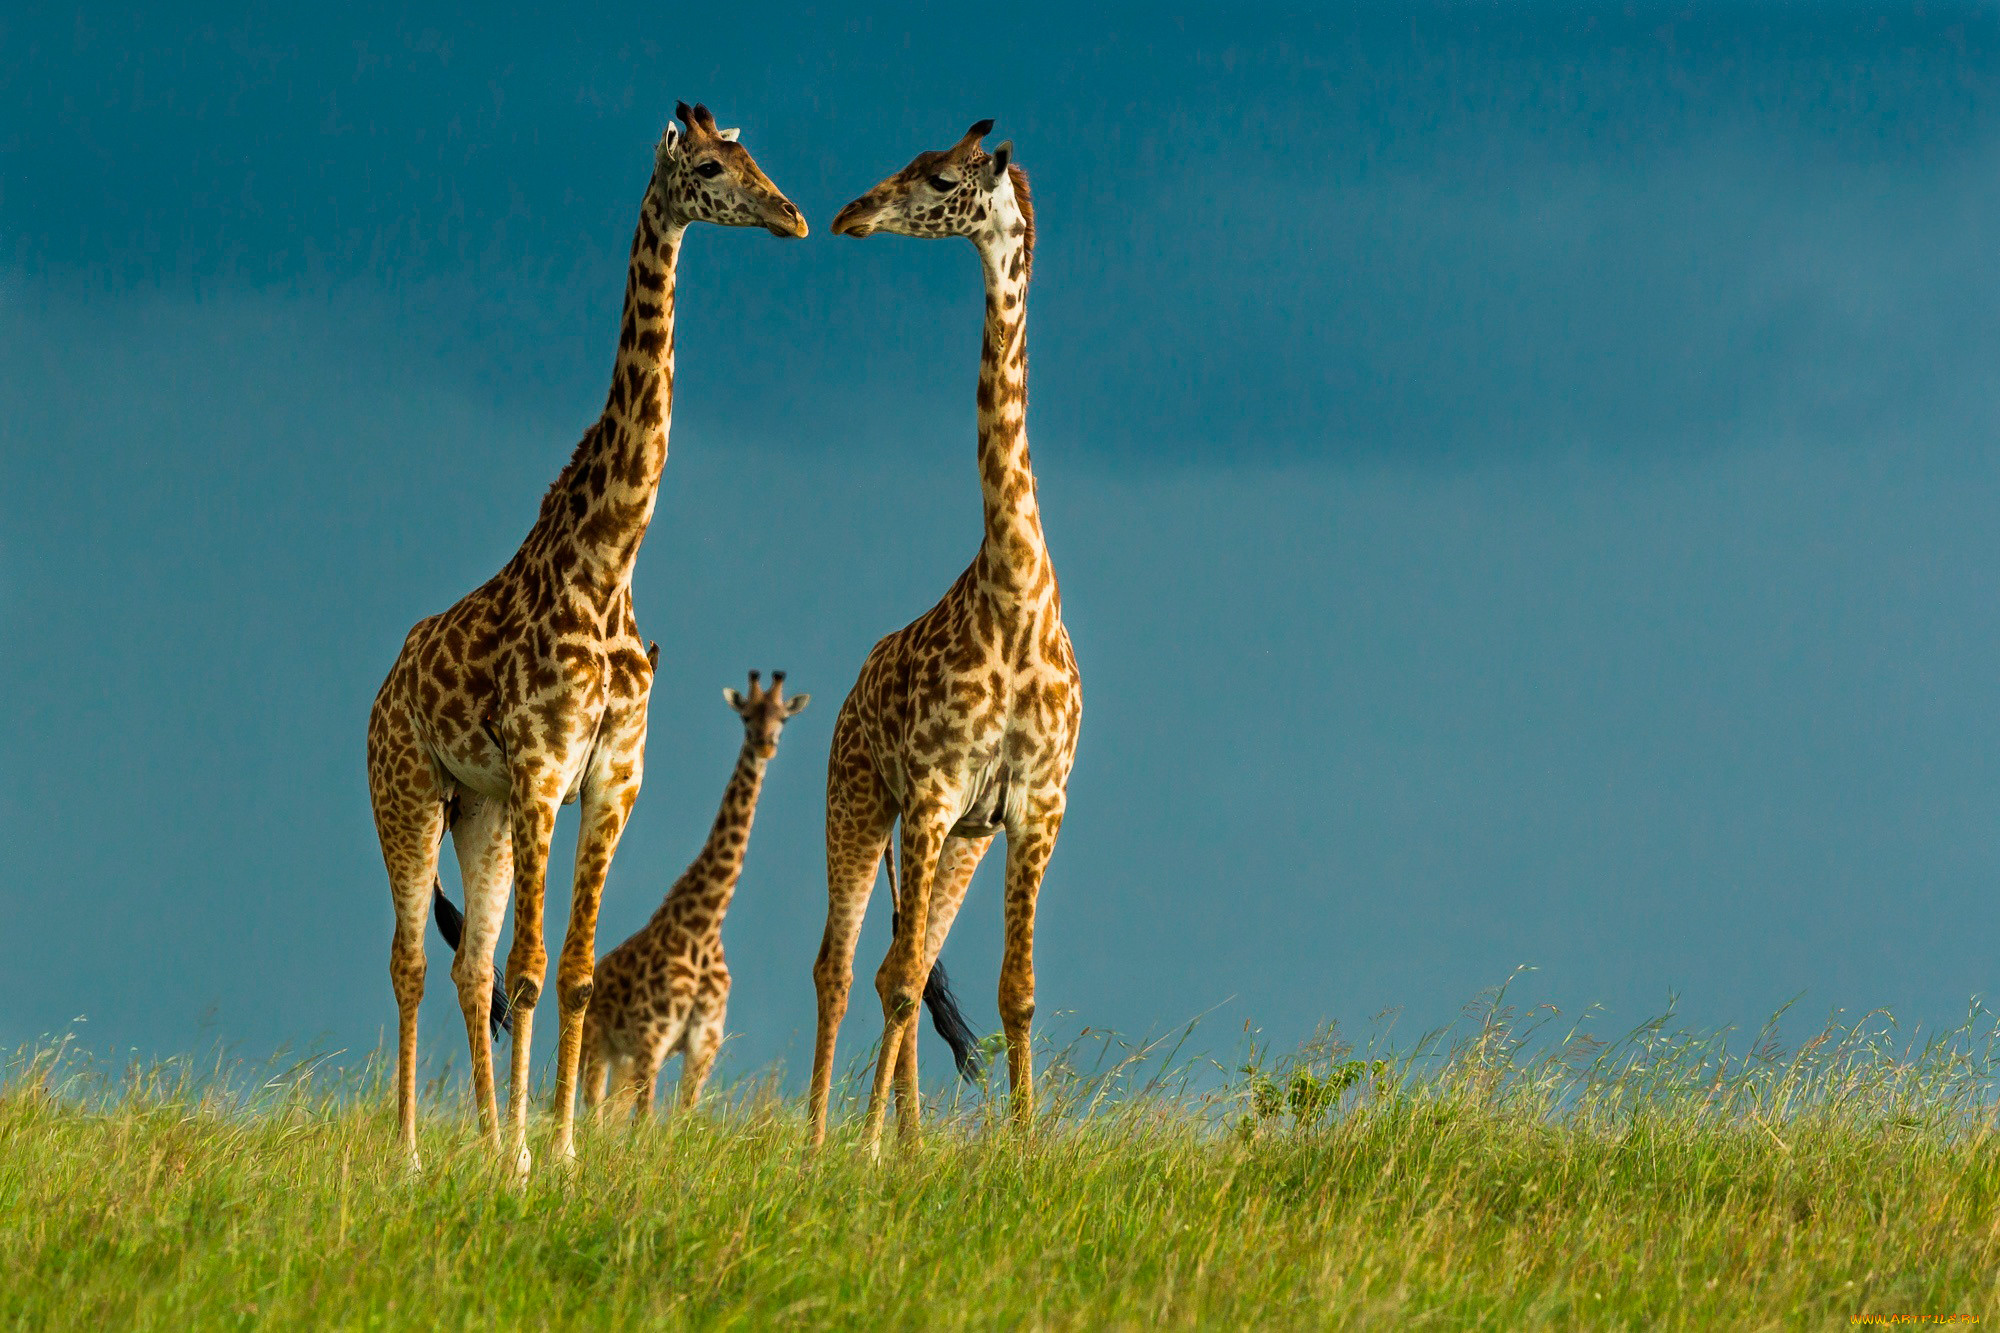 Animals images. Короткошеий Жираф. Giraffa Giraffa животные. Жирафье семейство. Красивый Жираф.